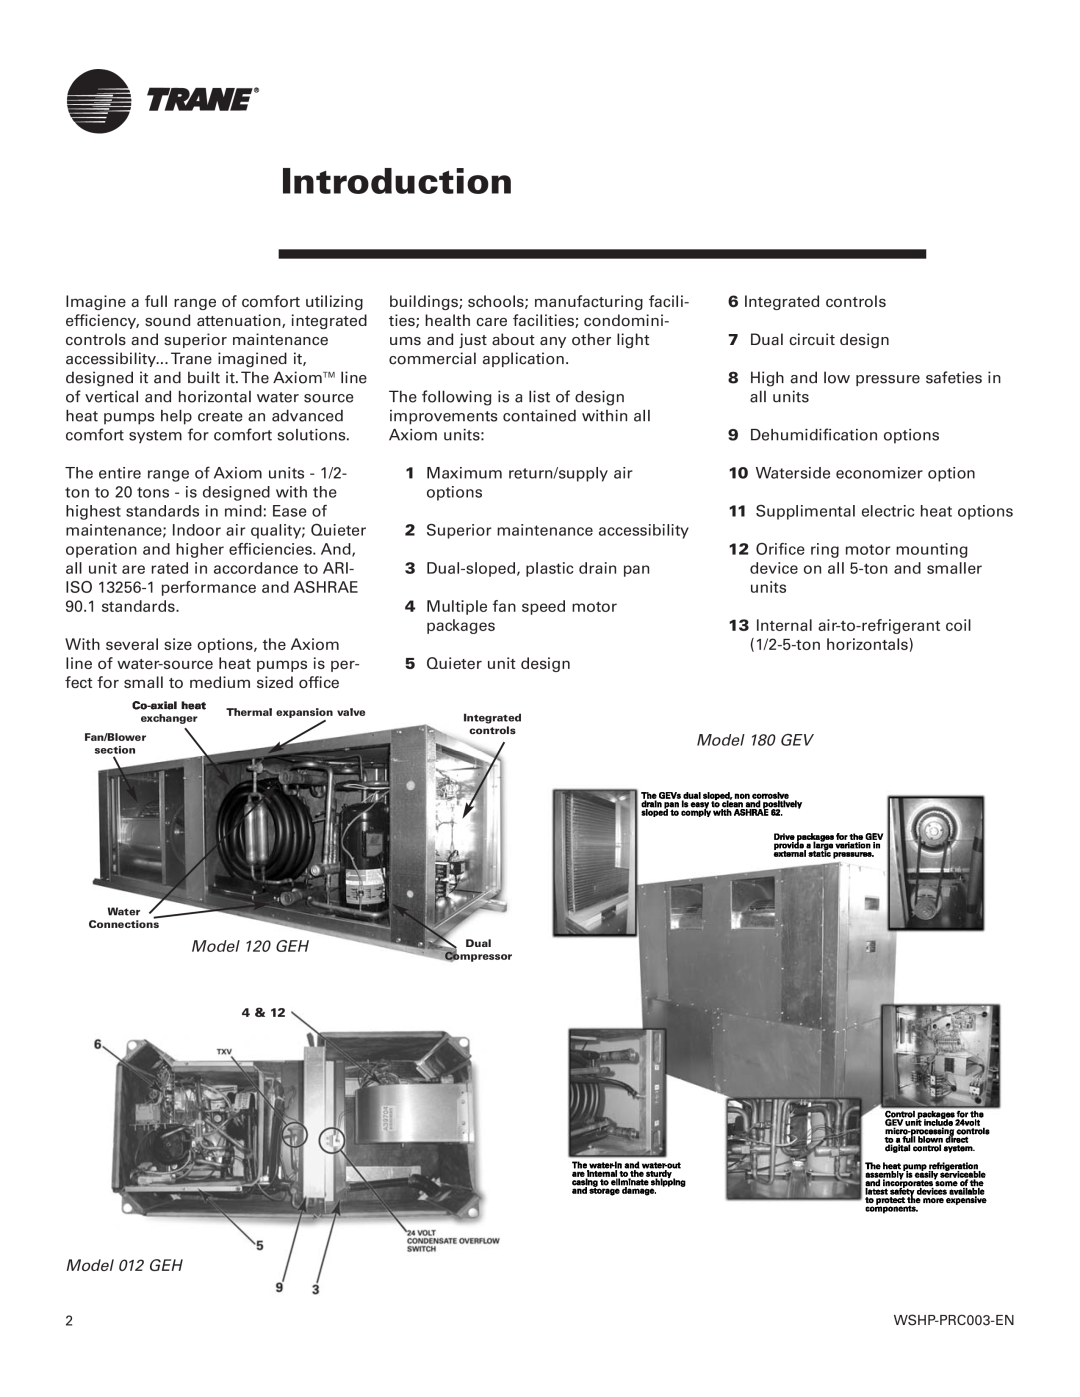 Trane Model 012 GEH manual Introduction, Model 180 GEV, Model 120 GEH 